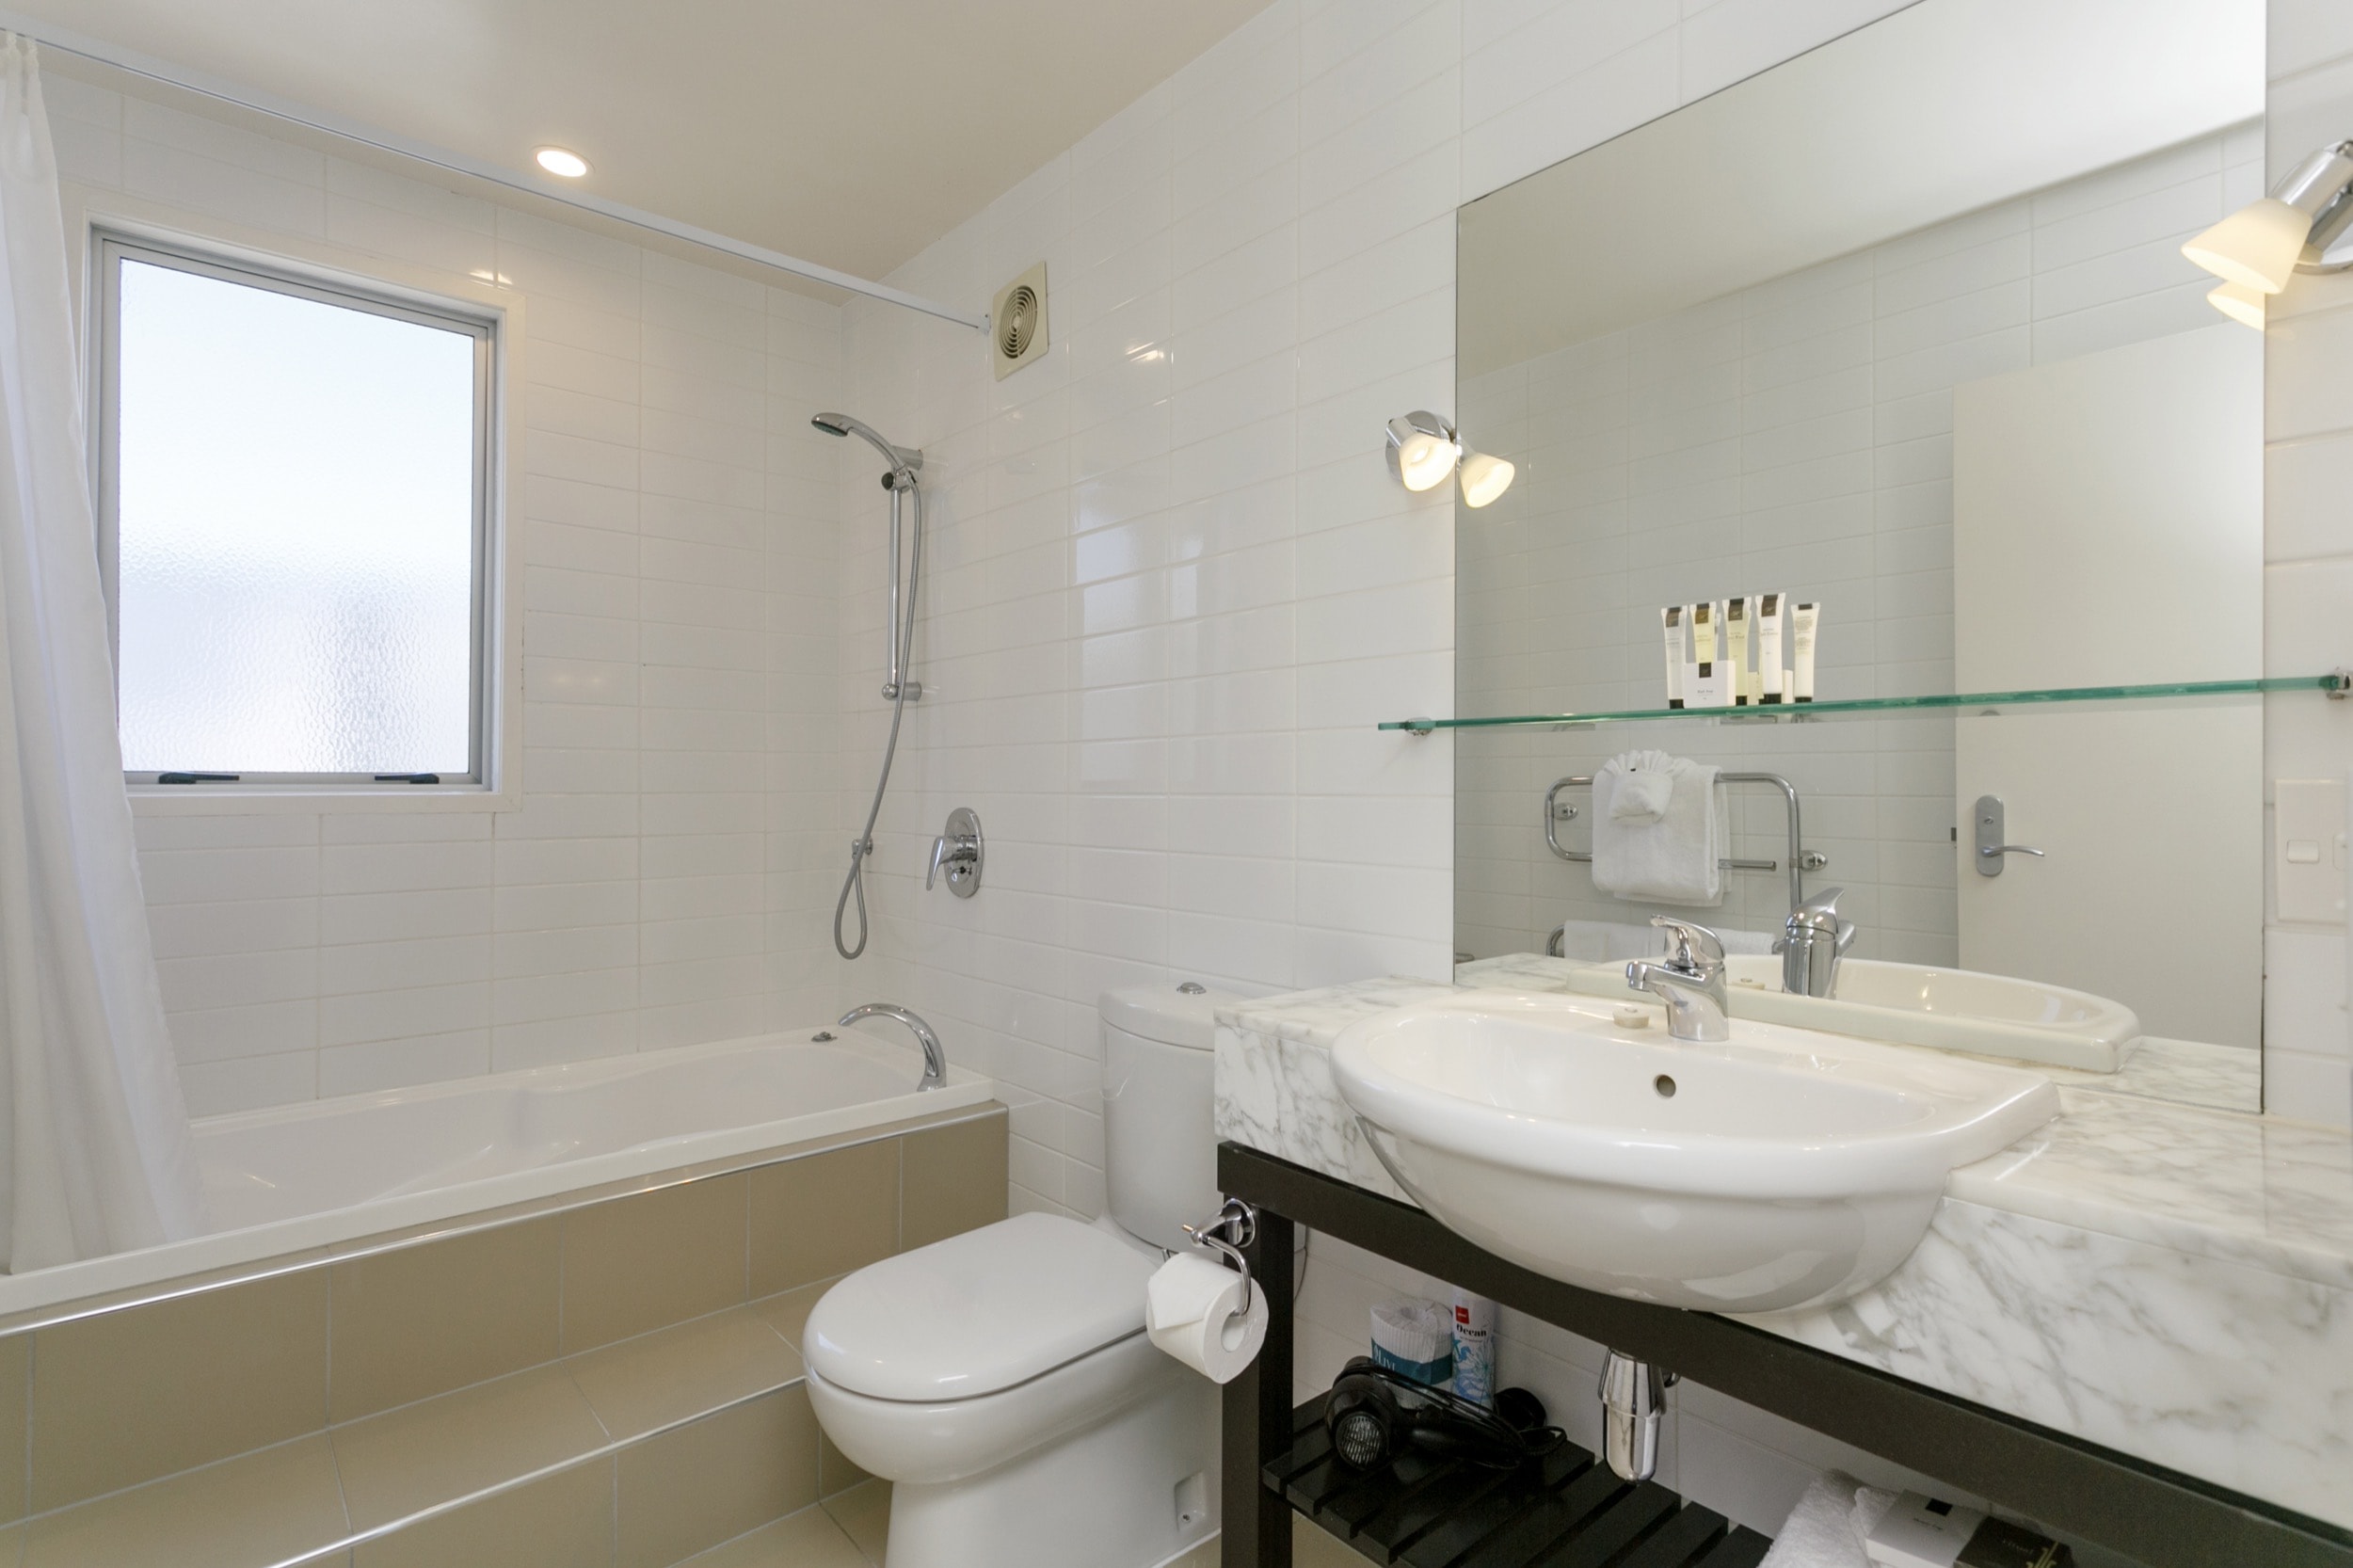 One Bedroom Gardev View bathrooms showing spa bath 2-min.jpg